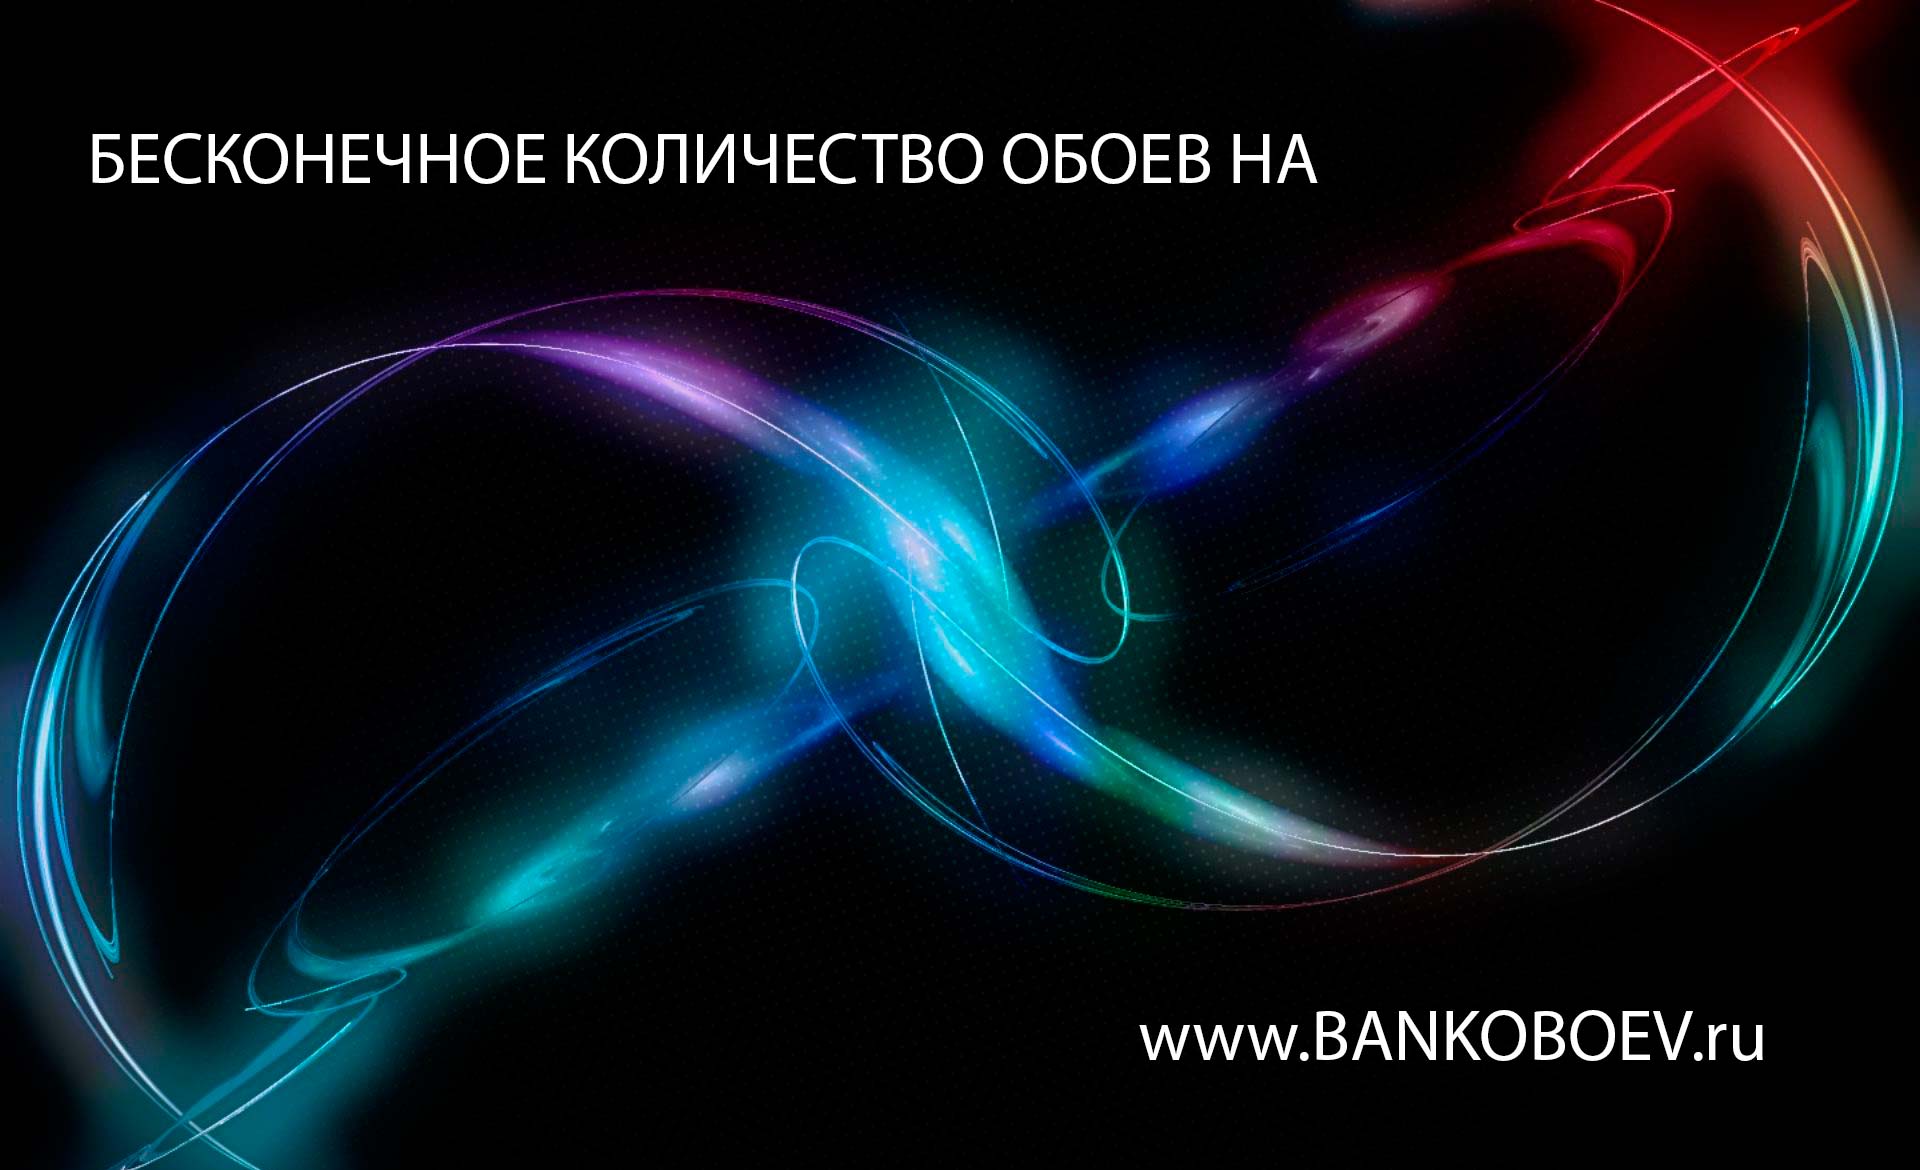 Source Bankoboev Ru Image Nty2mjm